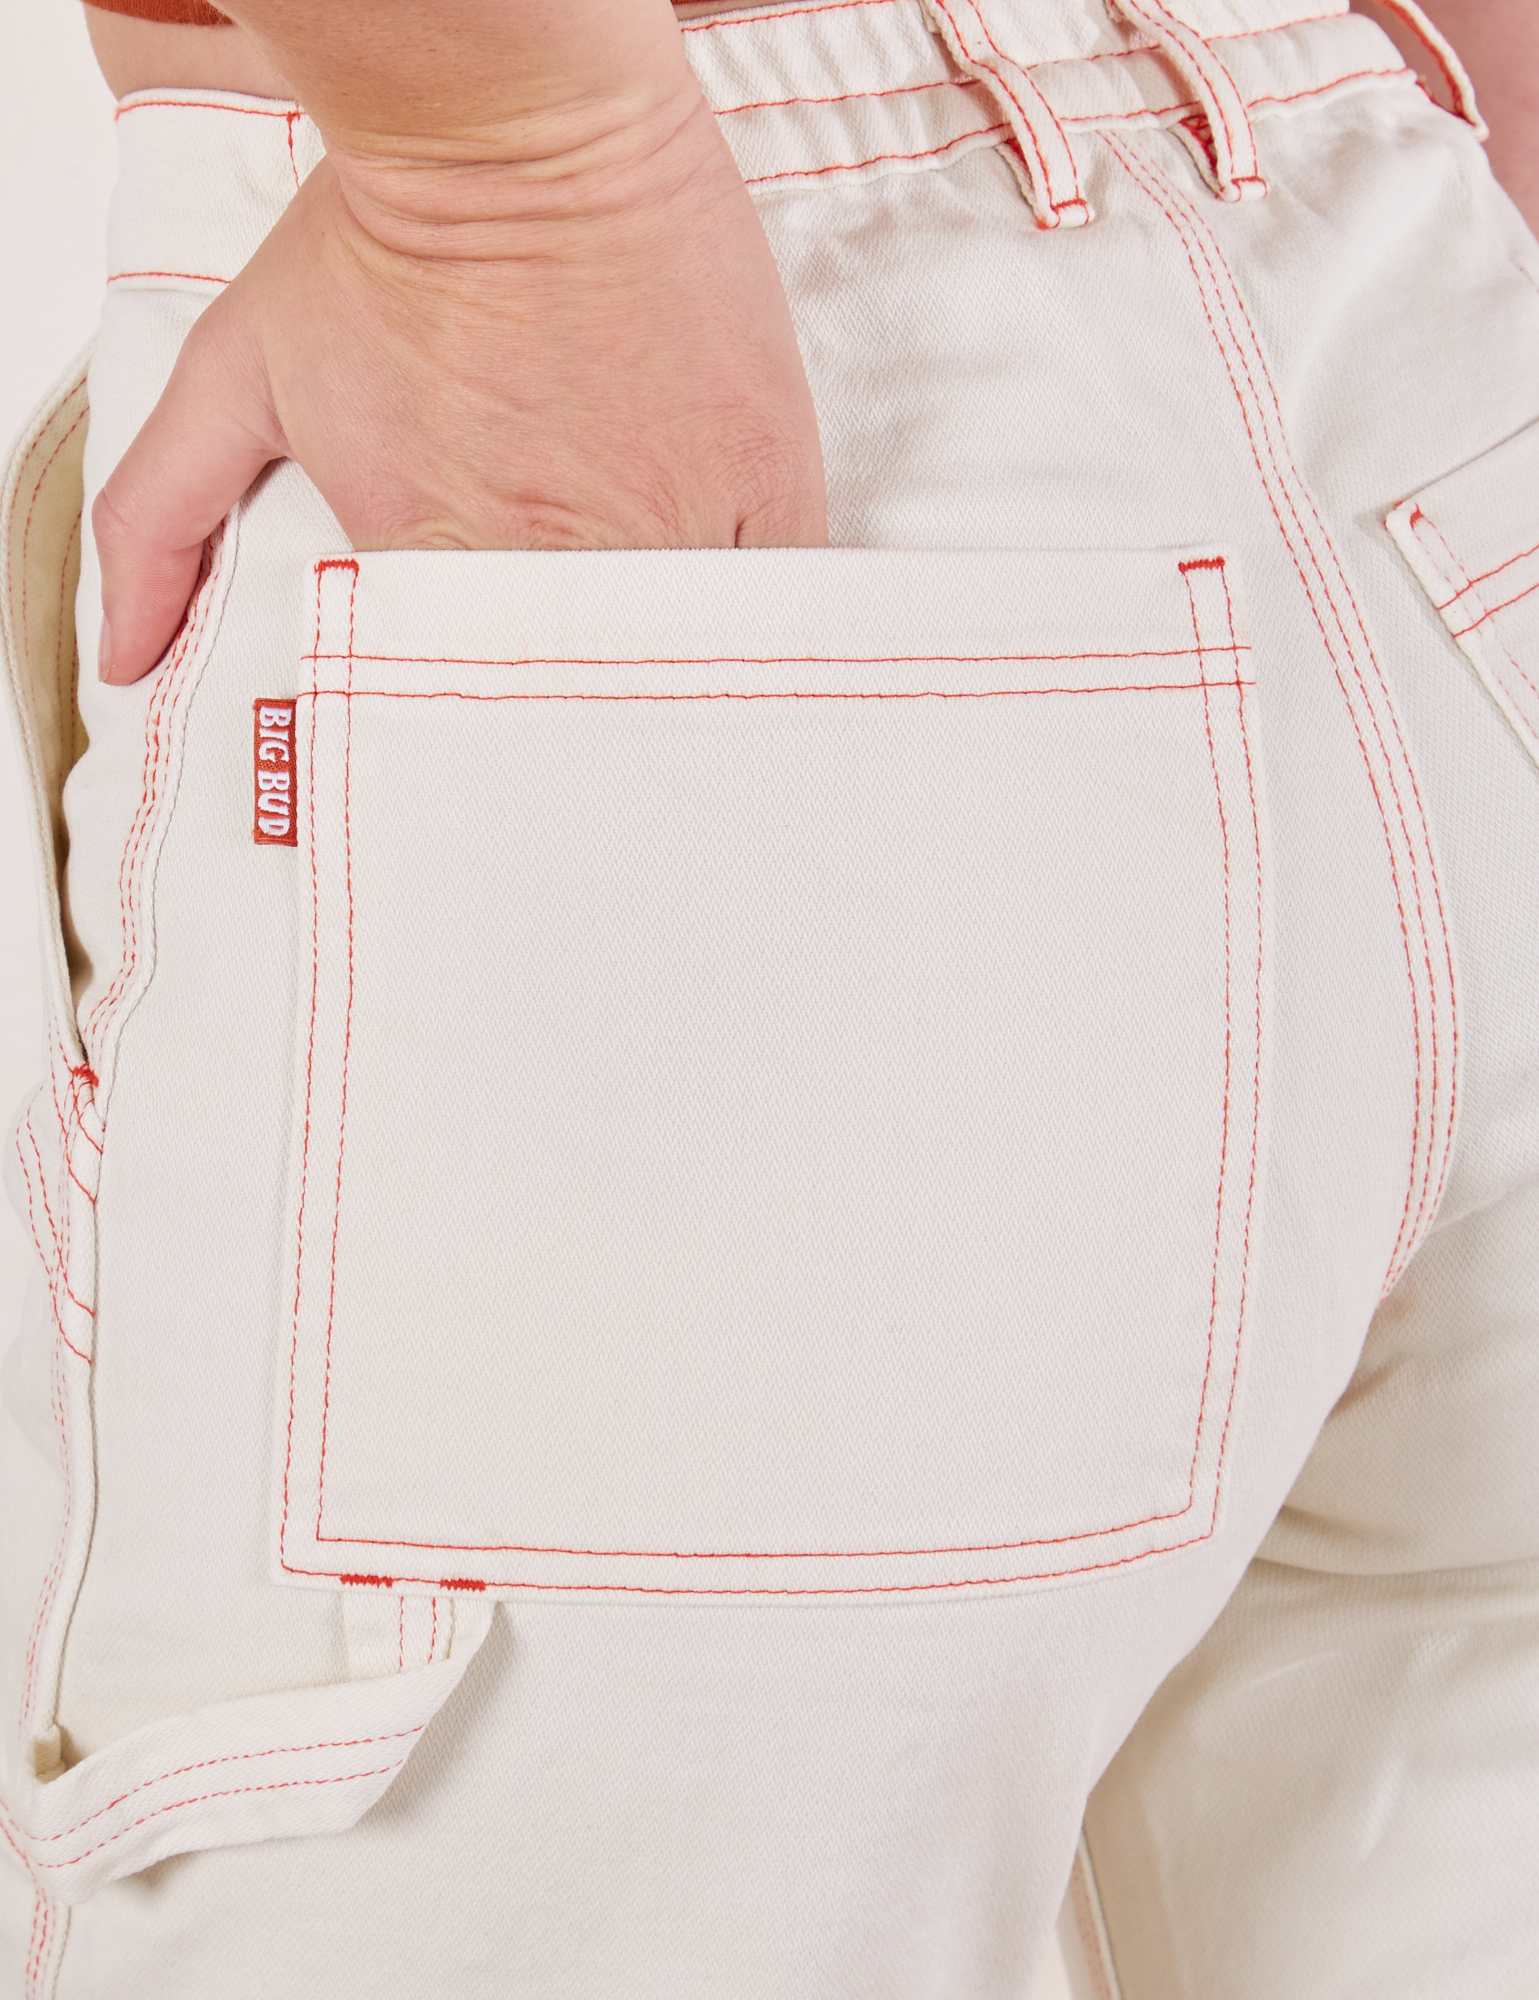 Carpenter Jeans in Vintage Off-White back pocket close up. Alex has her hand in the pocket.